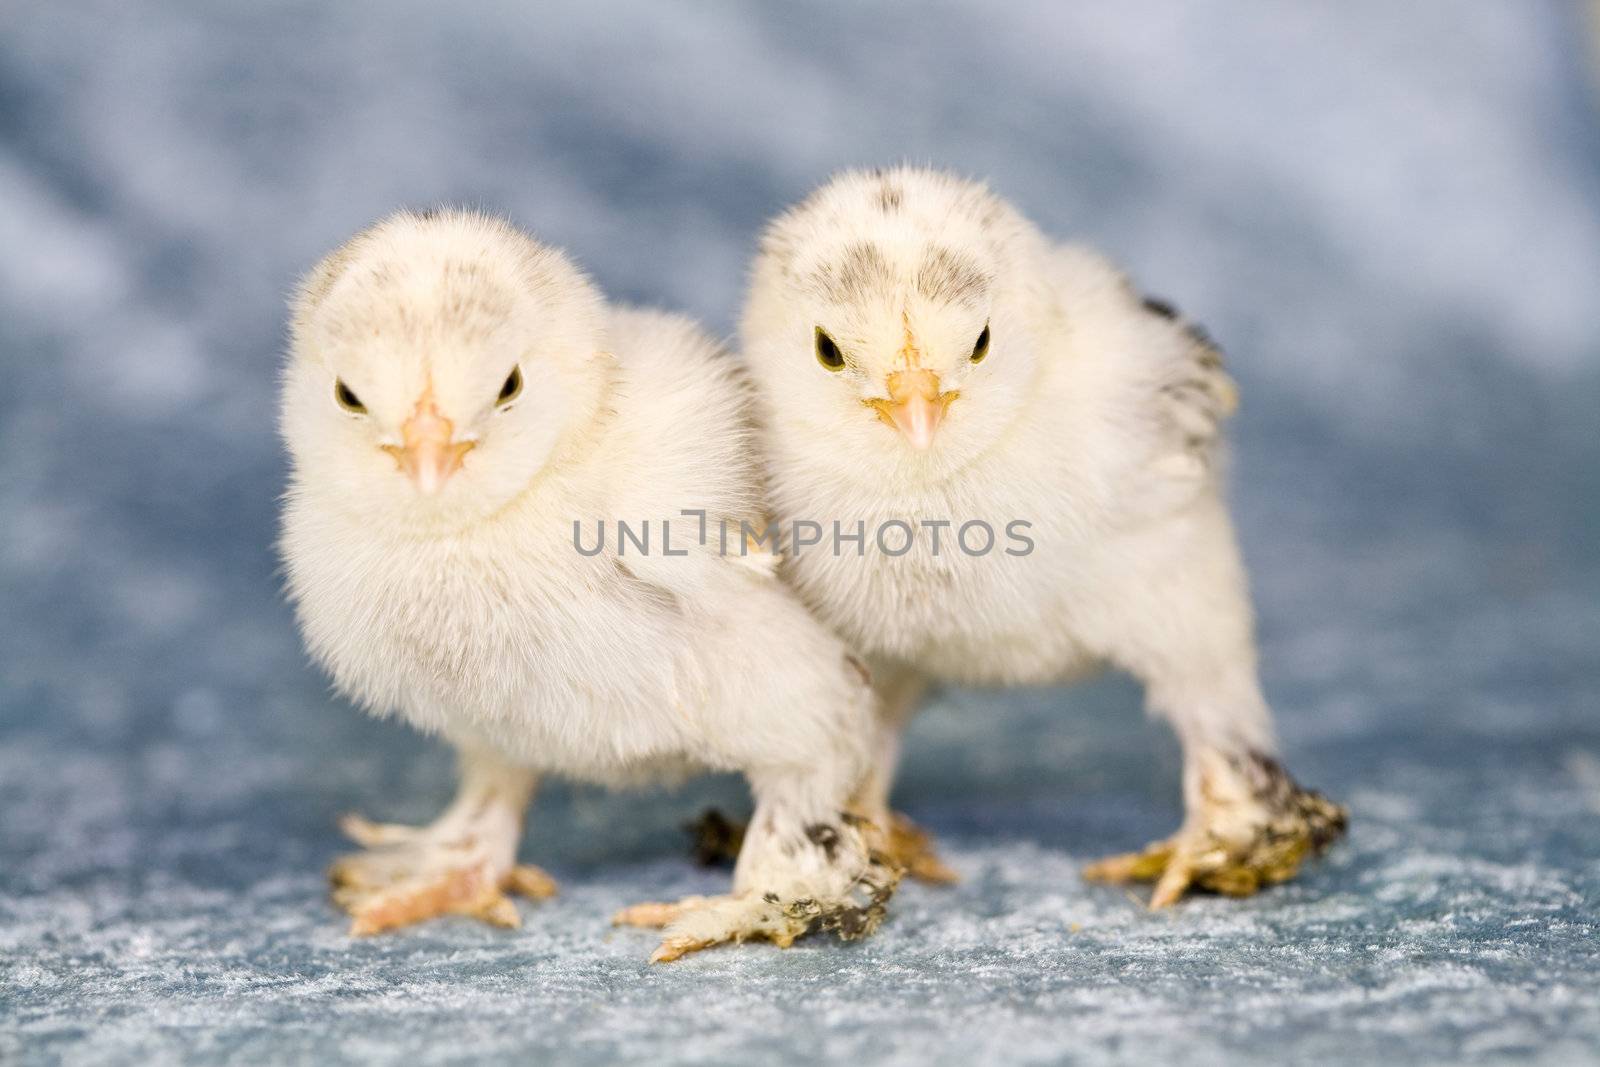 Cute little chickens by Fotosmurf